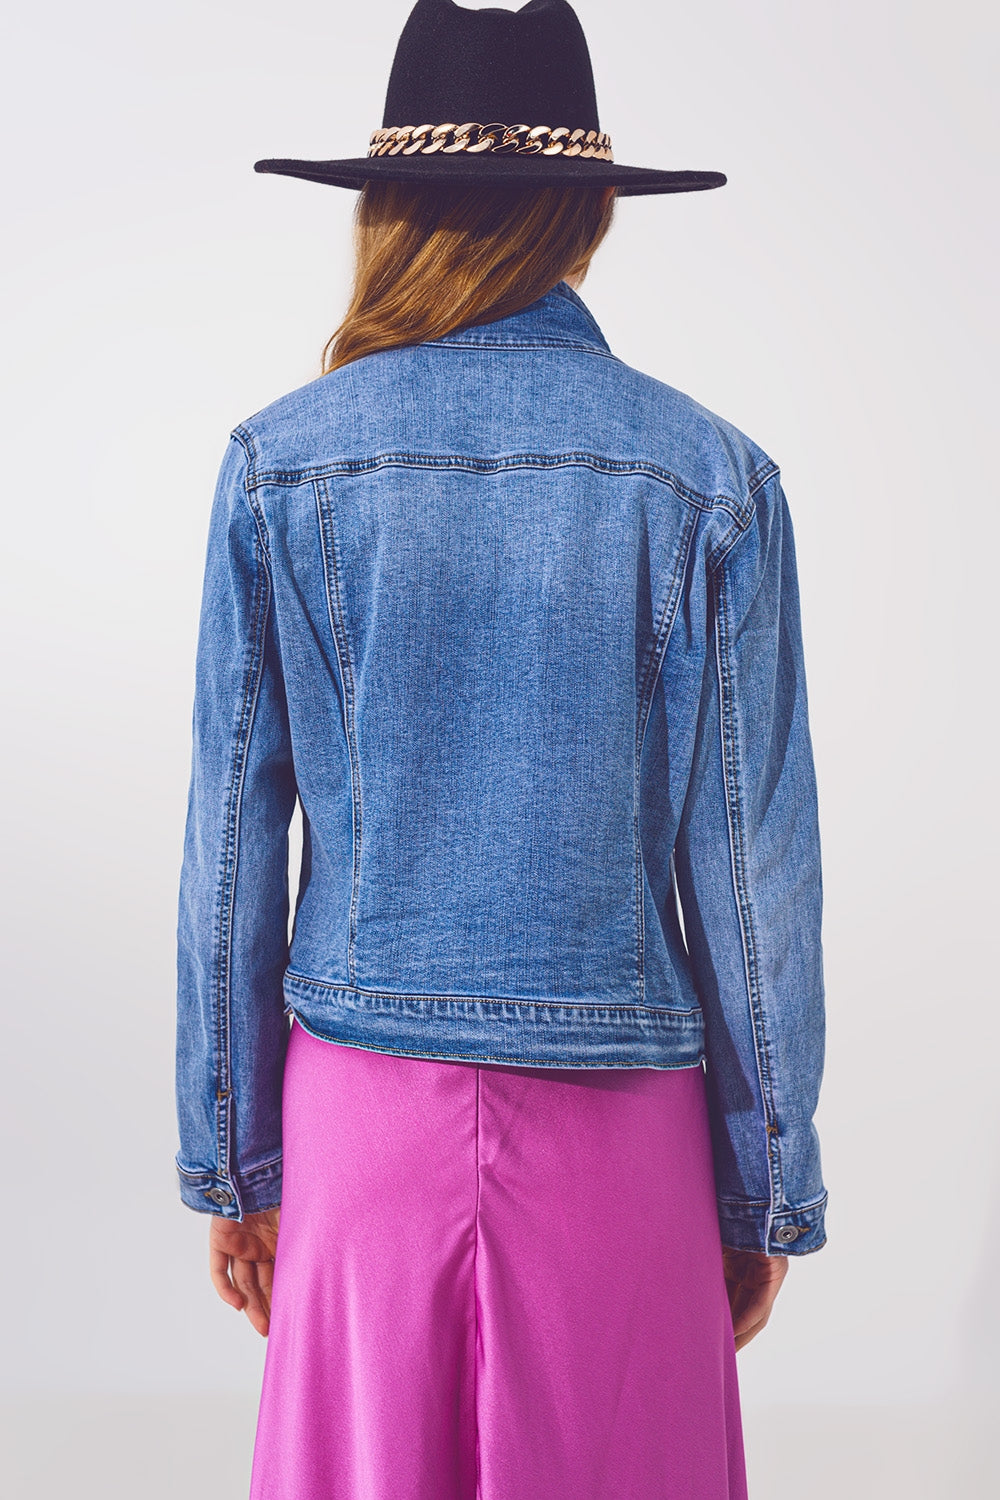 Denim jacket in light blue wash with sequin detail - Szua Store